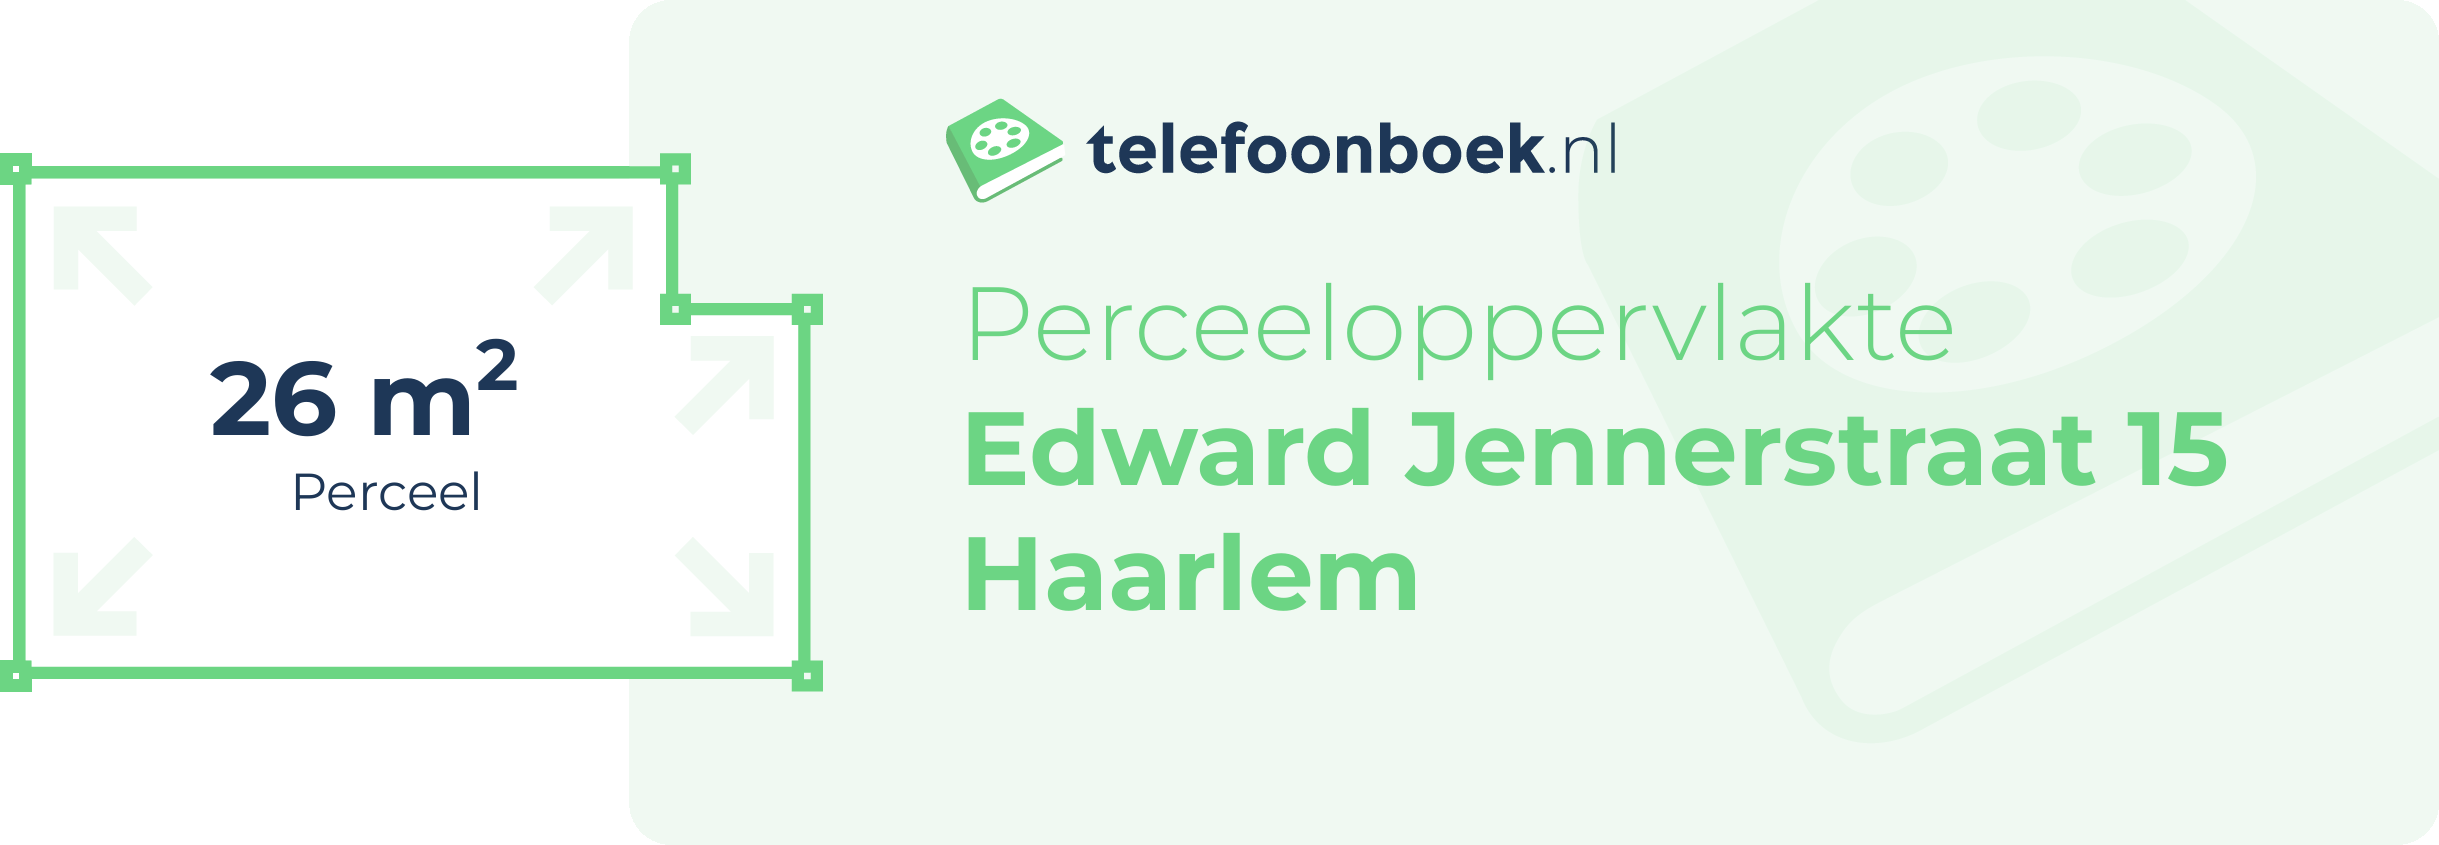 Perceeloppervlakte Edward Jennerstraat 15 Haarlem